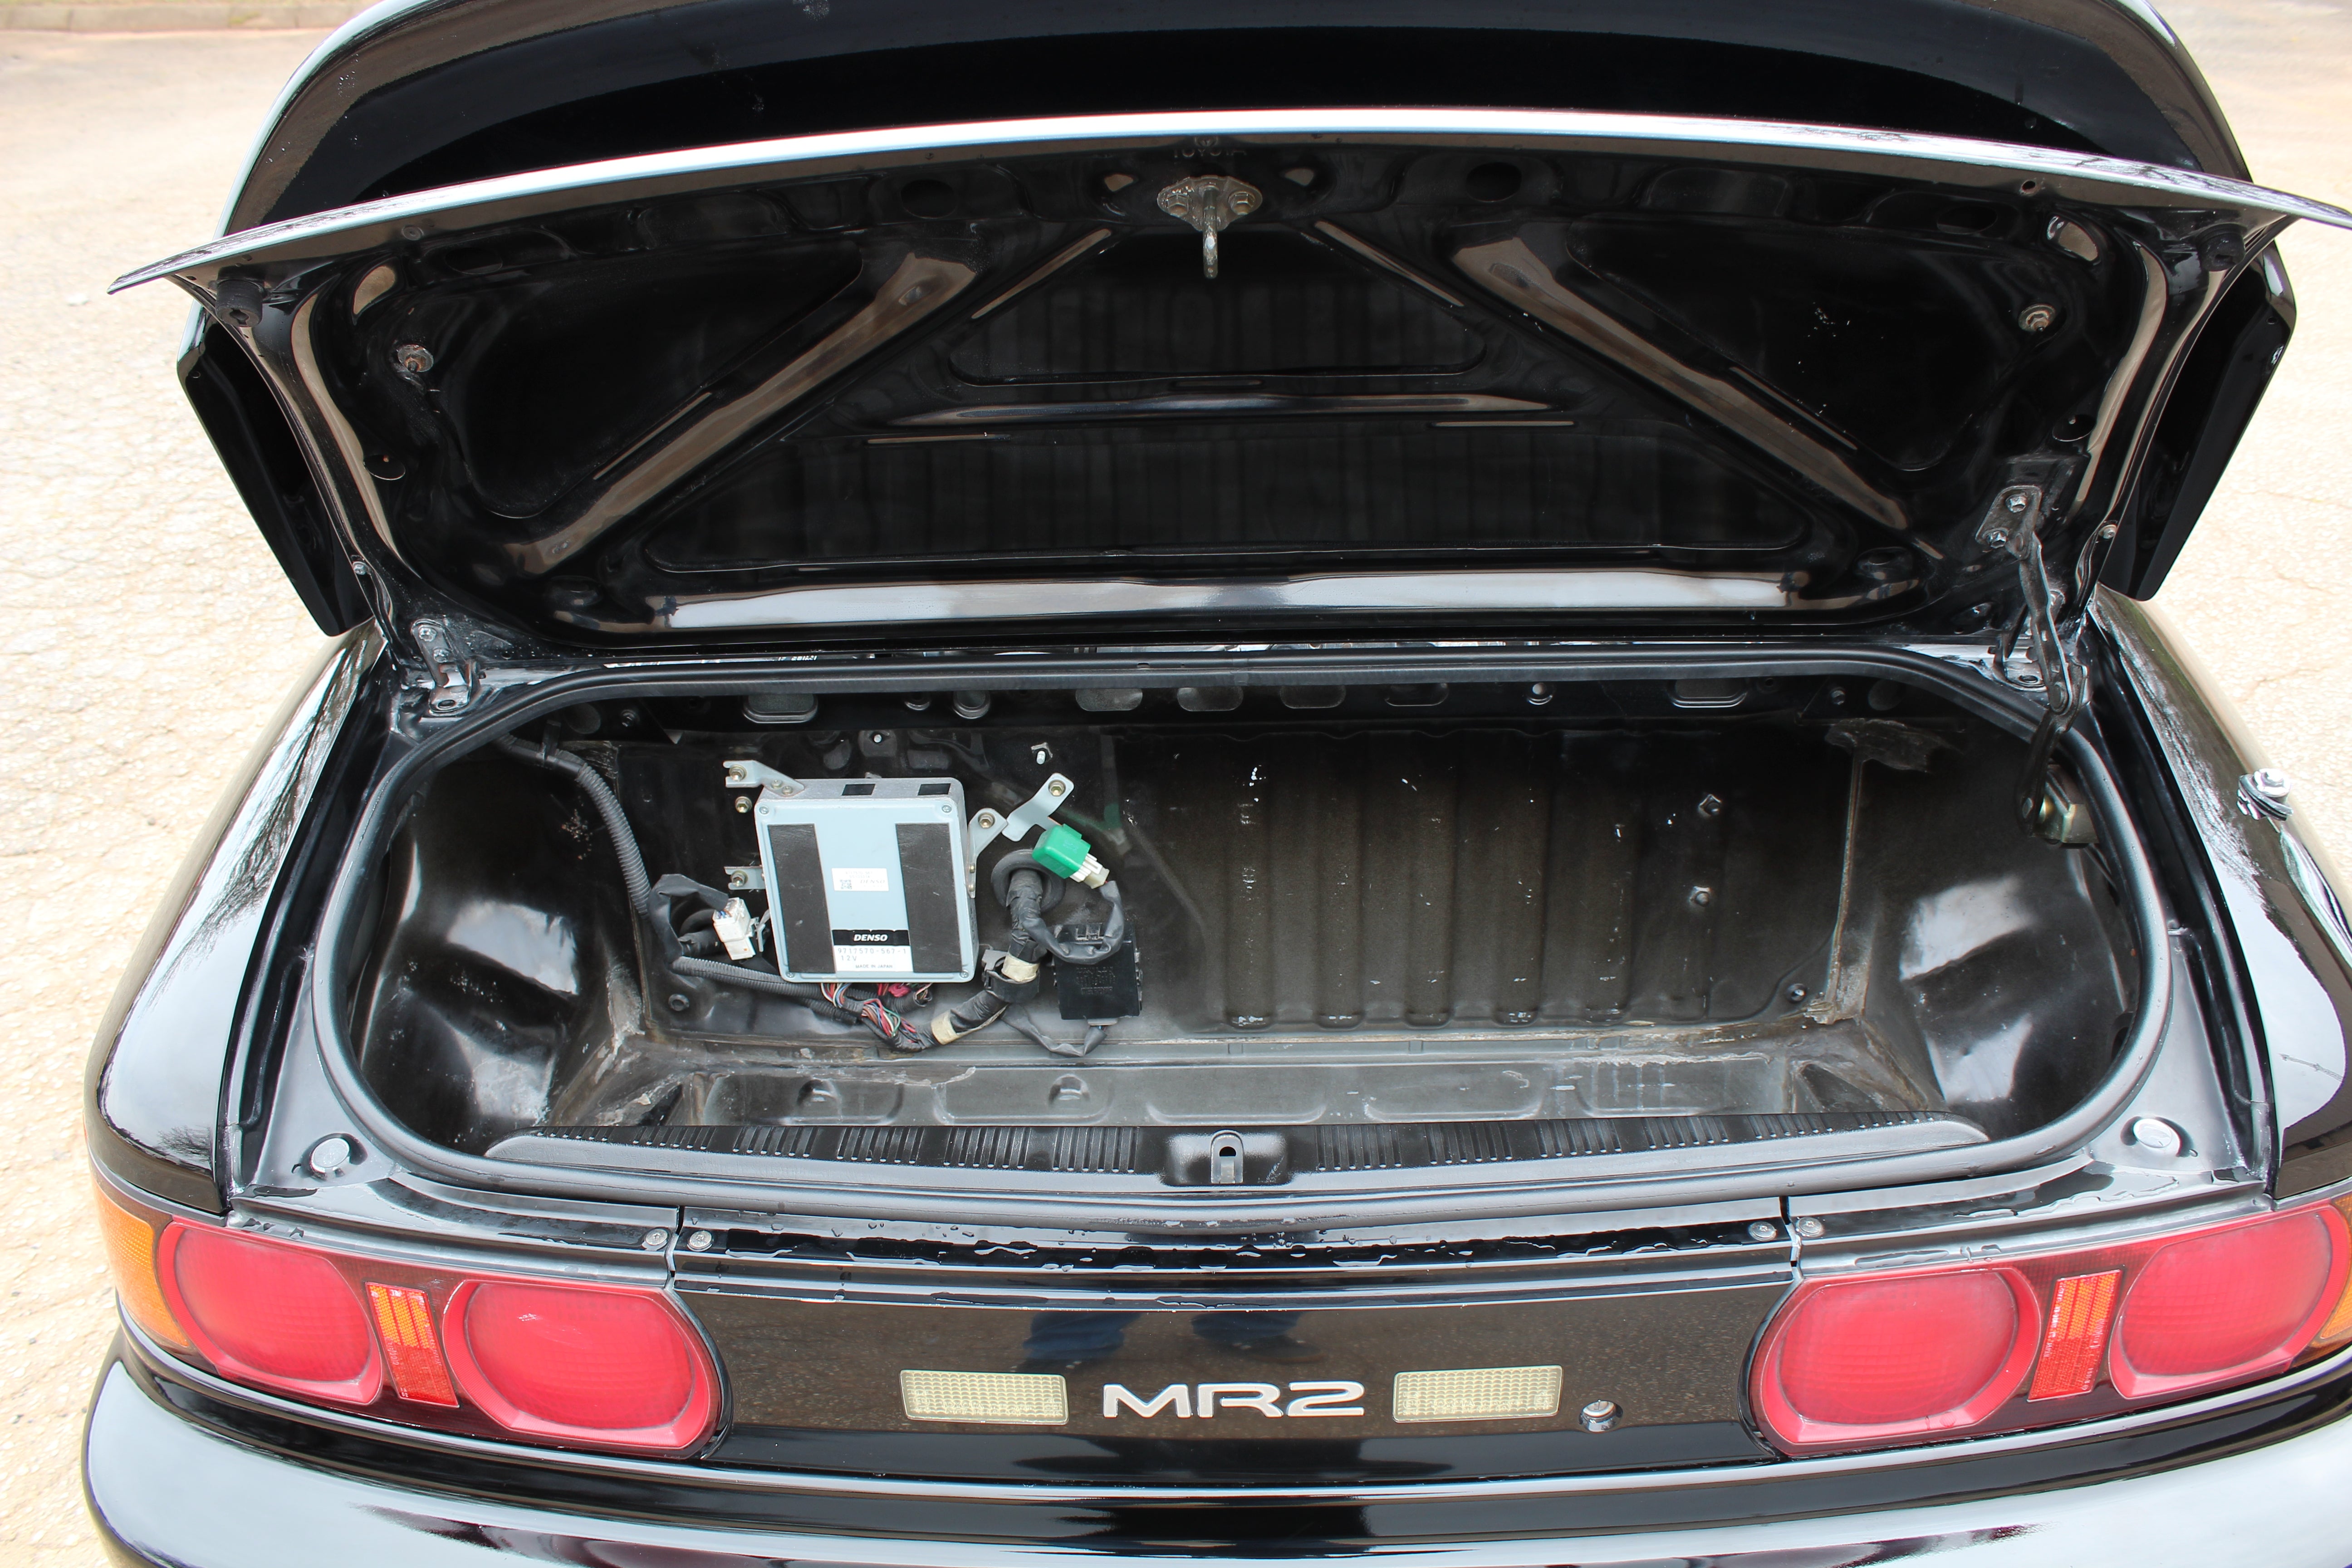 JDM 94 Toyota MR2 GT Rev 3 Turbo Manual RHD Mid Engine